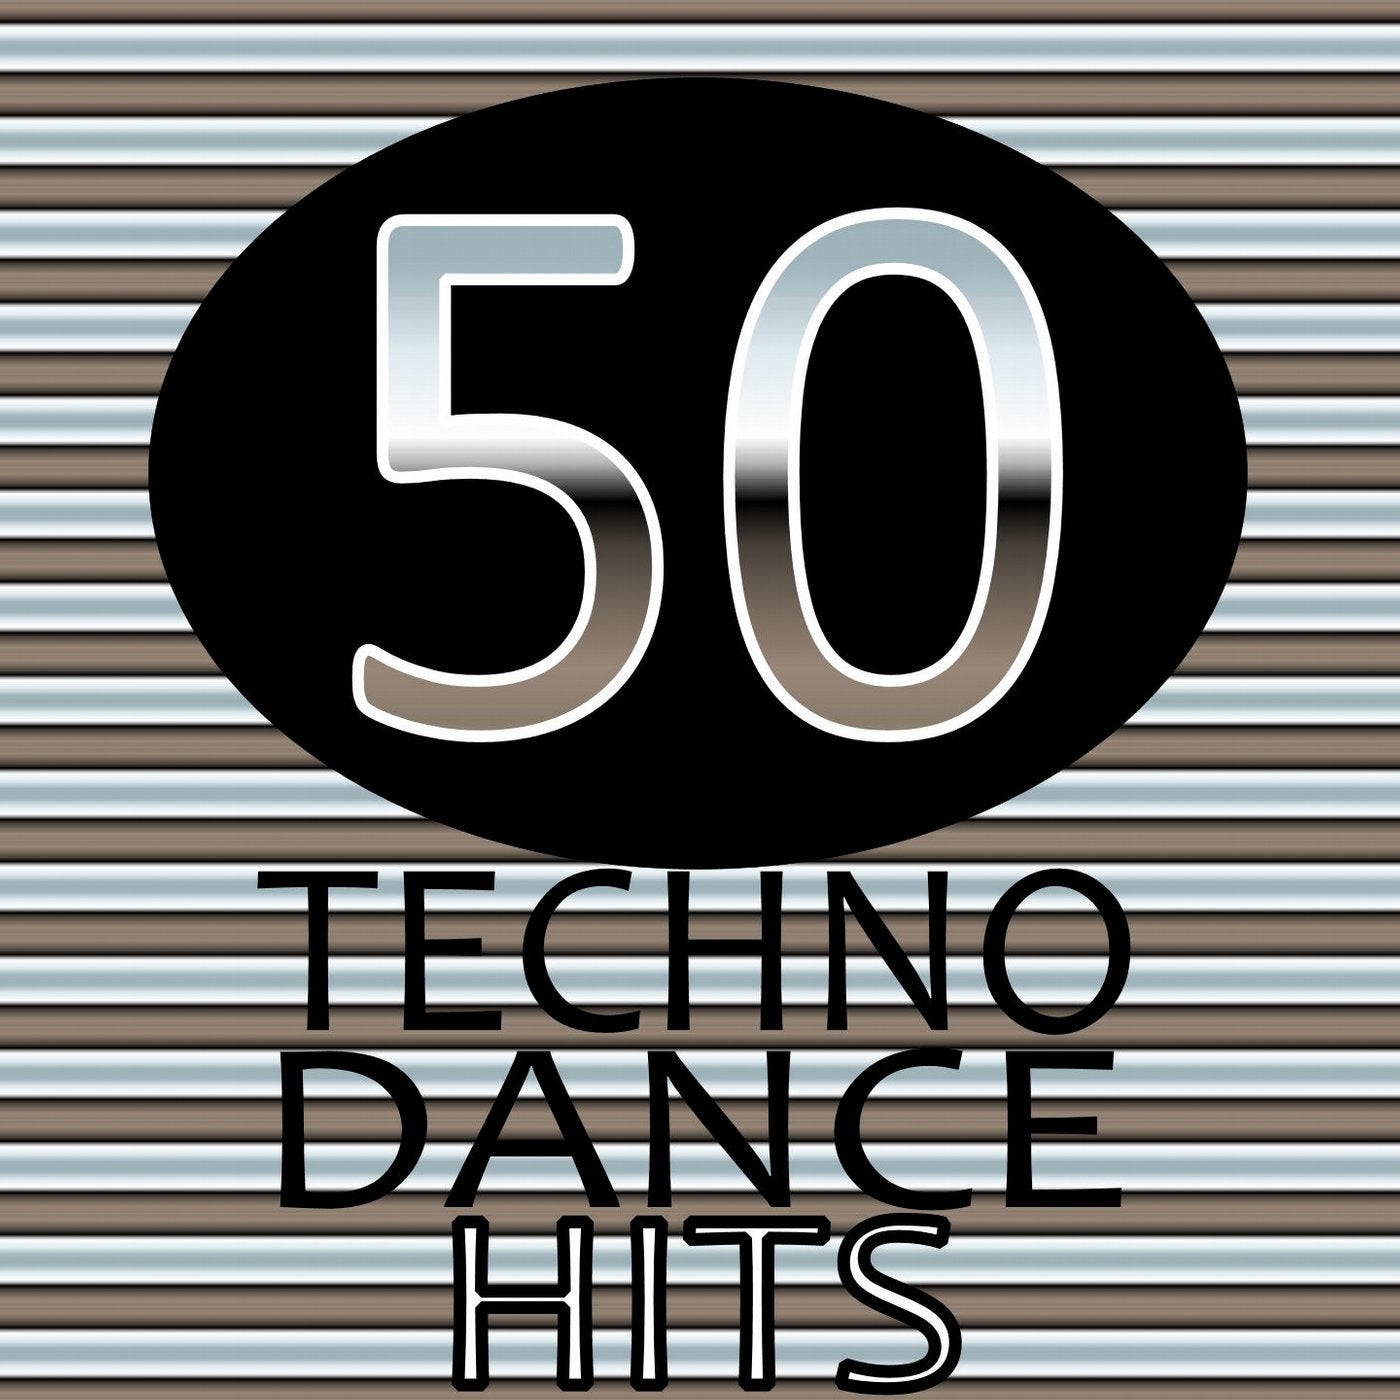 50 Techno Dance Hits